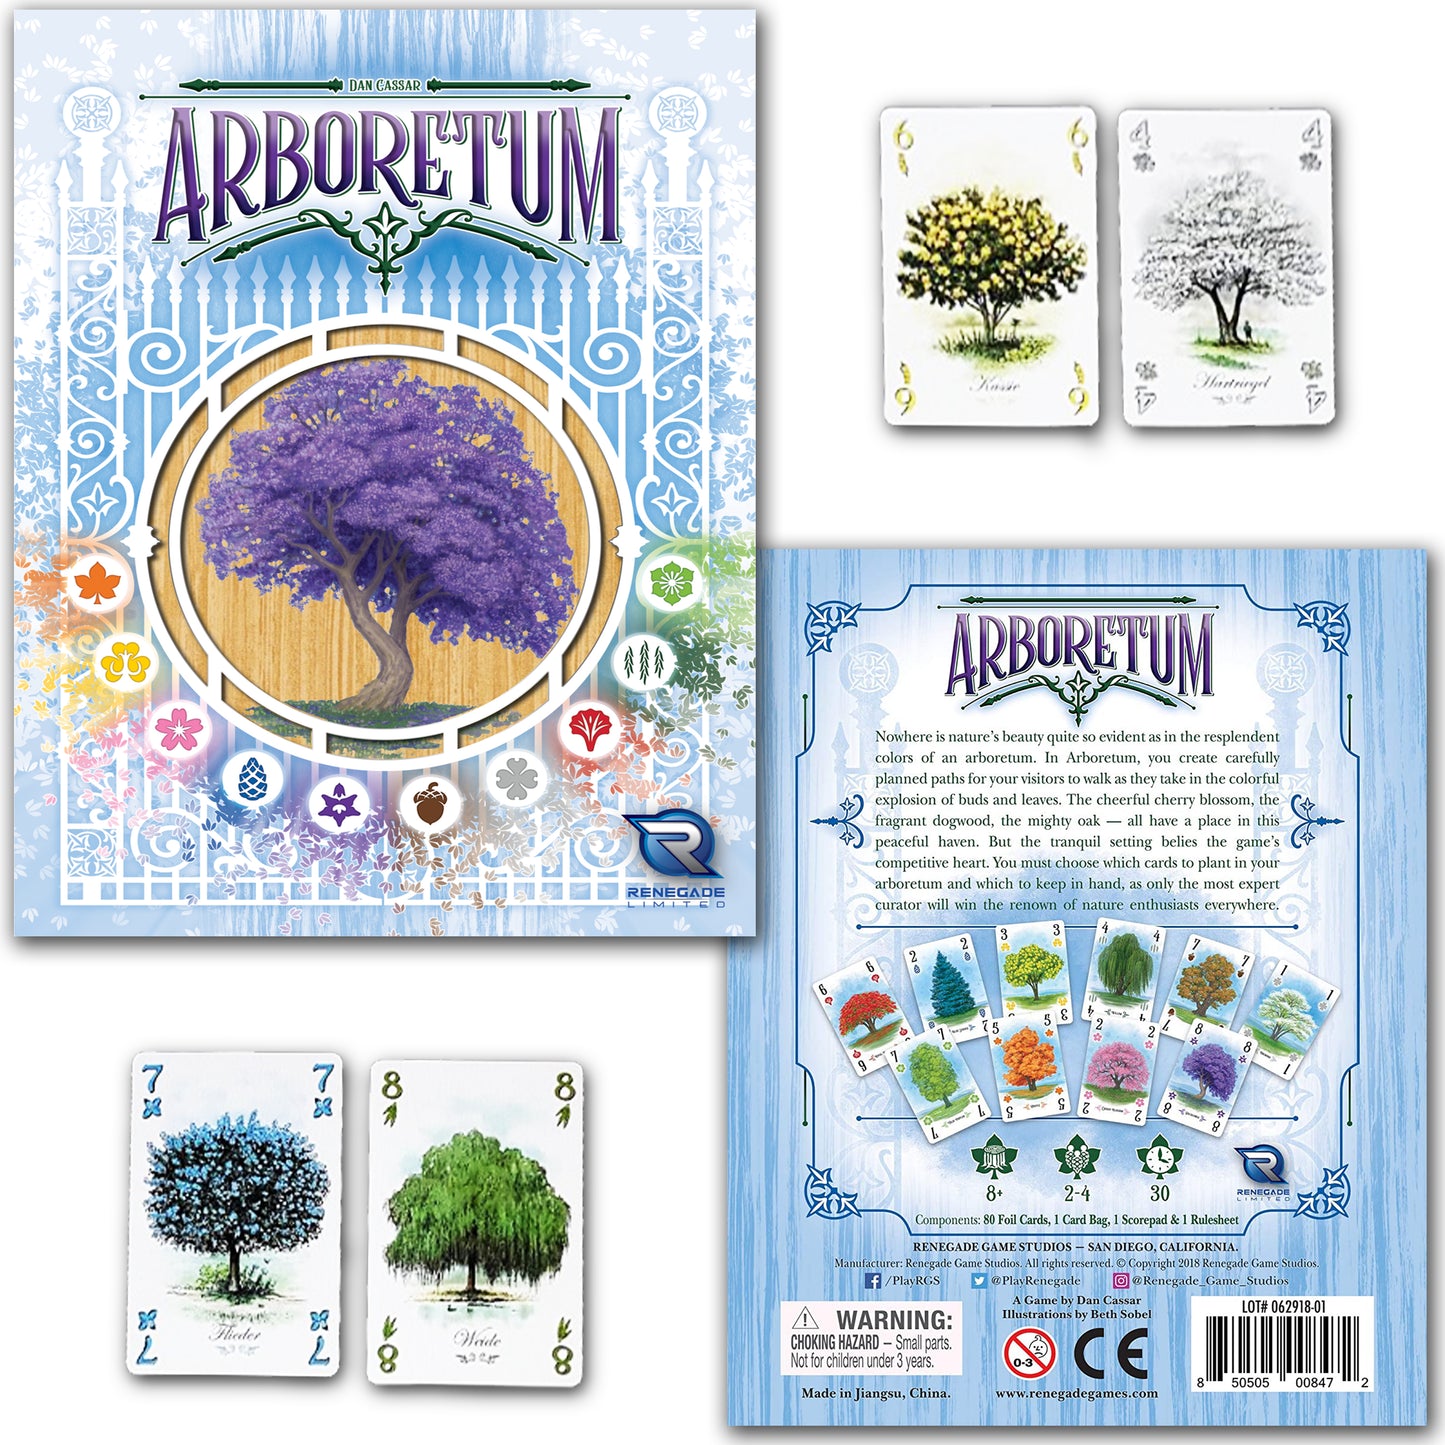 Arboretum - Botanic Garden of Trees Card Game - Full Strategy - Bundle With Random Color Drawstring Bag